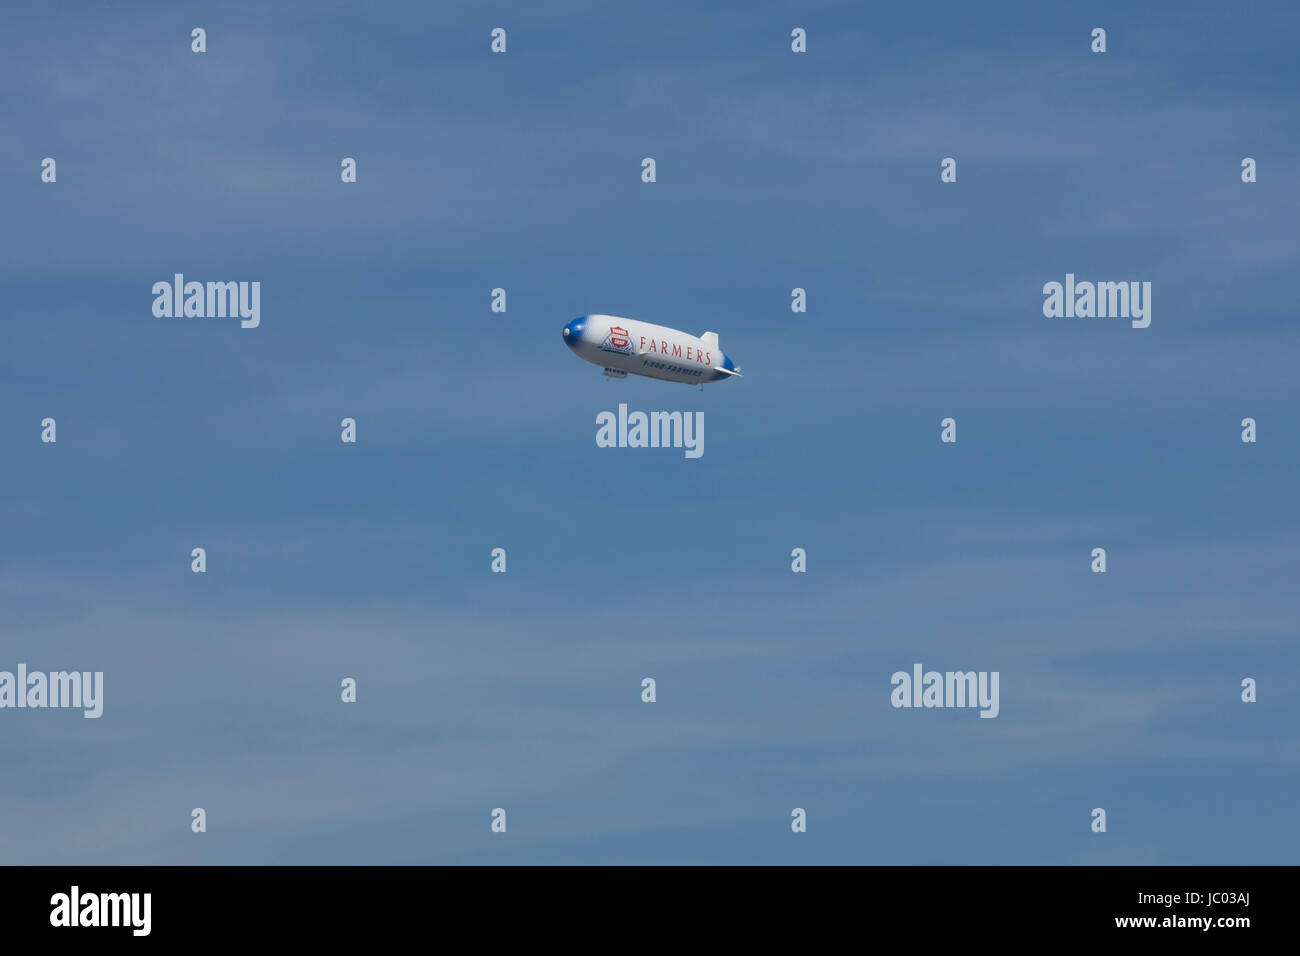 Farmers Insurance Company Werbung blimp Flugzeuge - USA Stockfoto